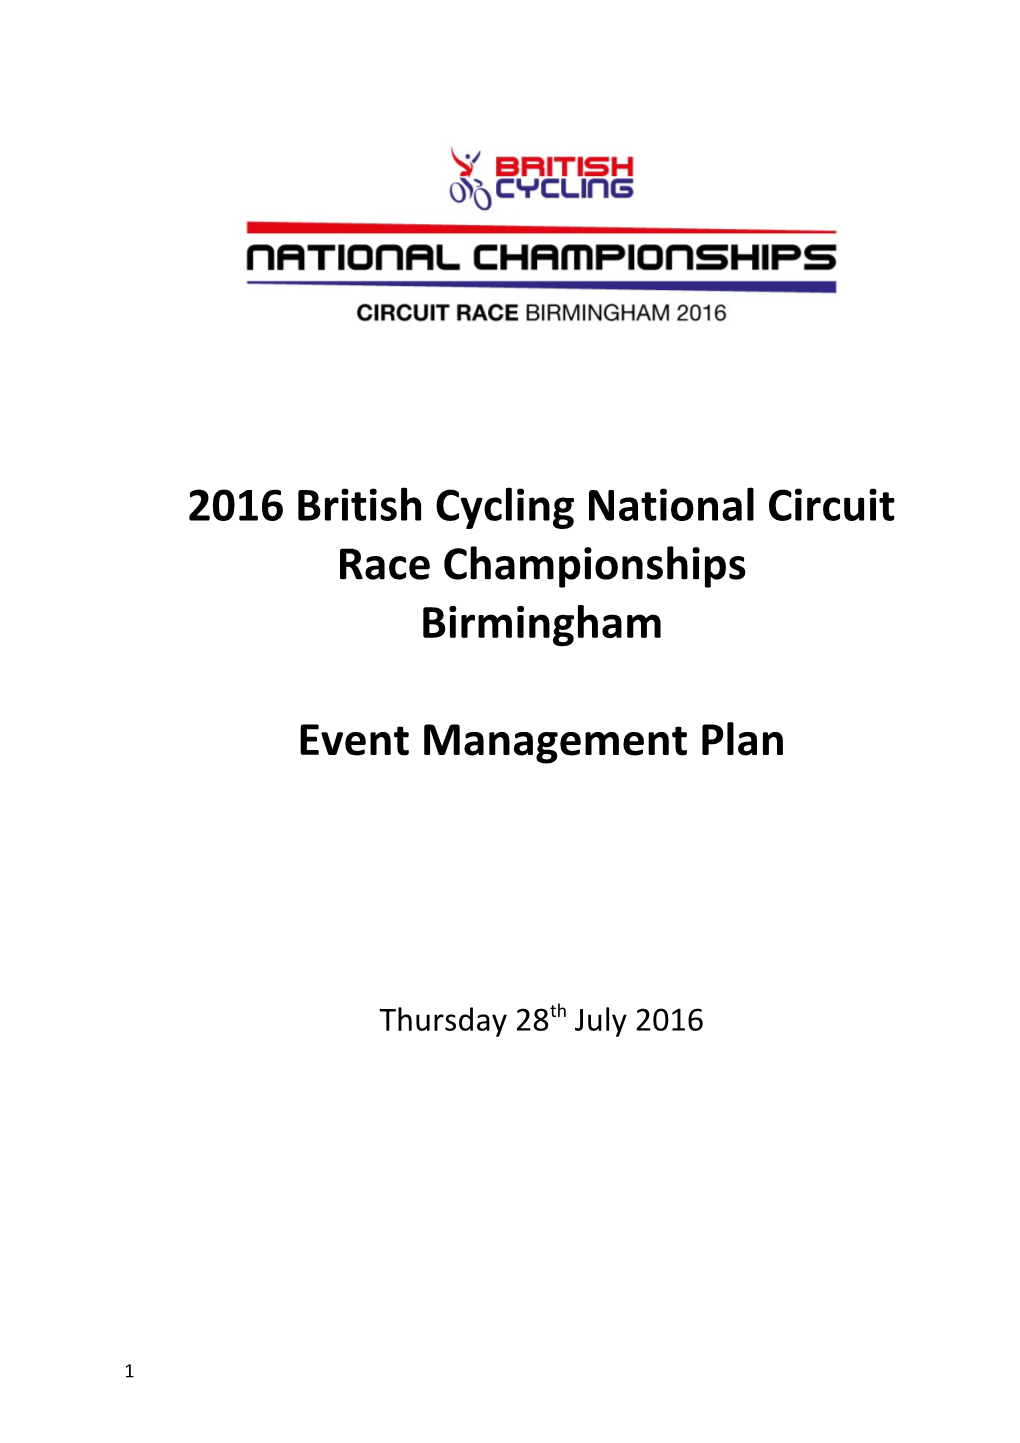 2016 British Cycling National Circuit Race Championships